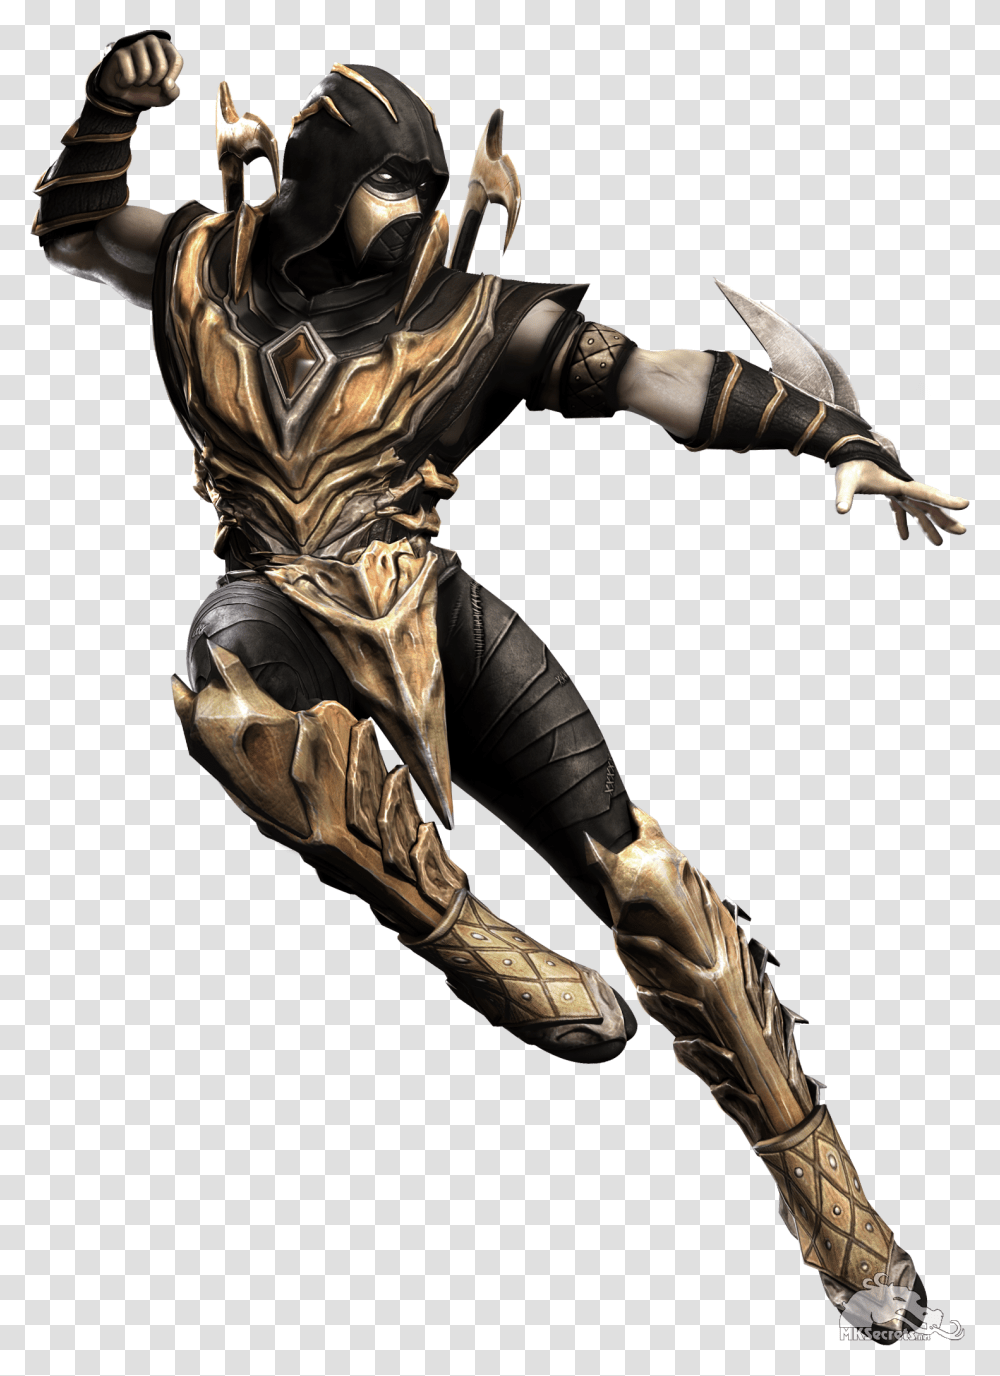 Mortal Kombat Scorpion Scorpion Injustice, Bronze, Gun, Weapon, Armor Transparent Png